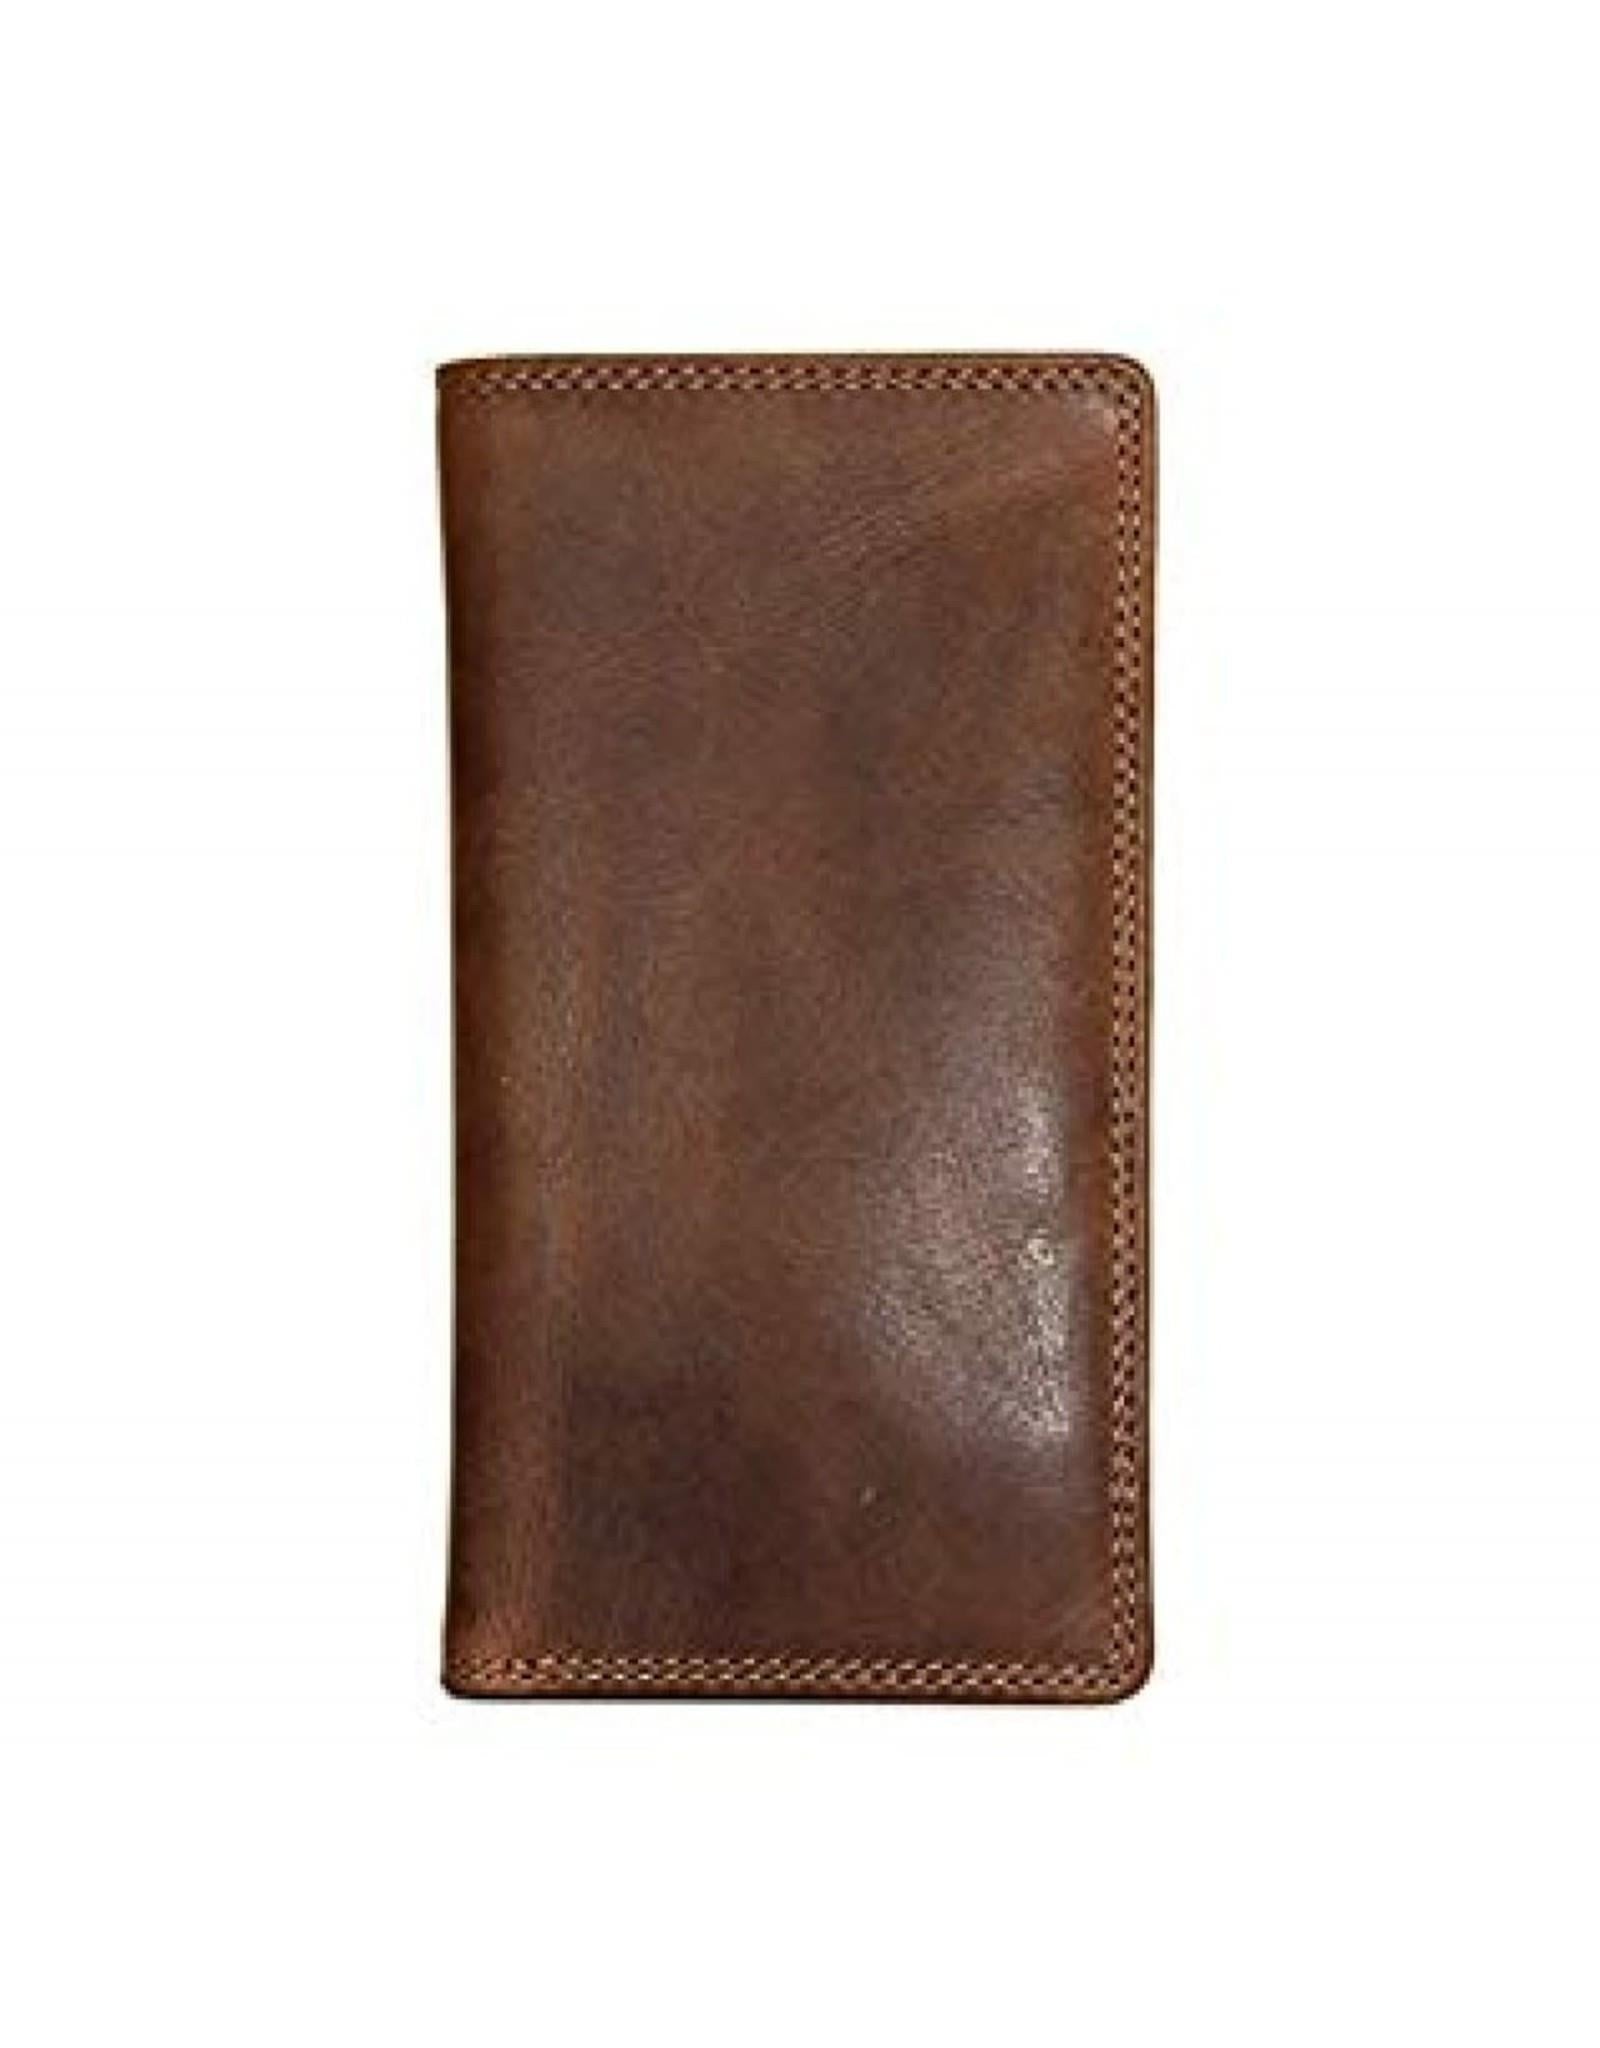 Rugged Earth Leather Bi Fold Wallet